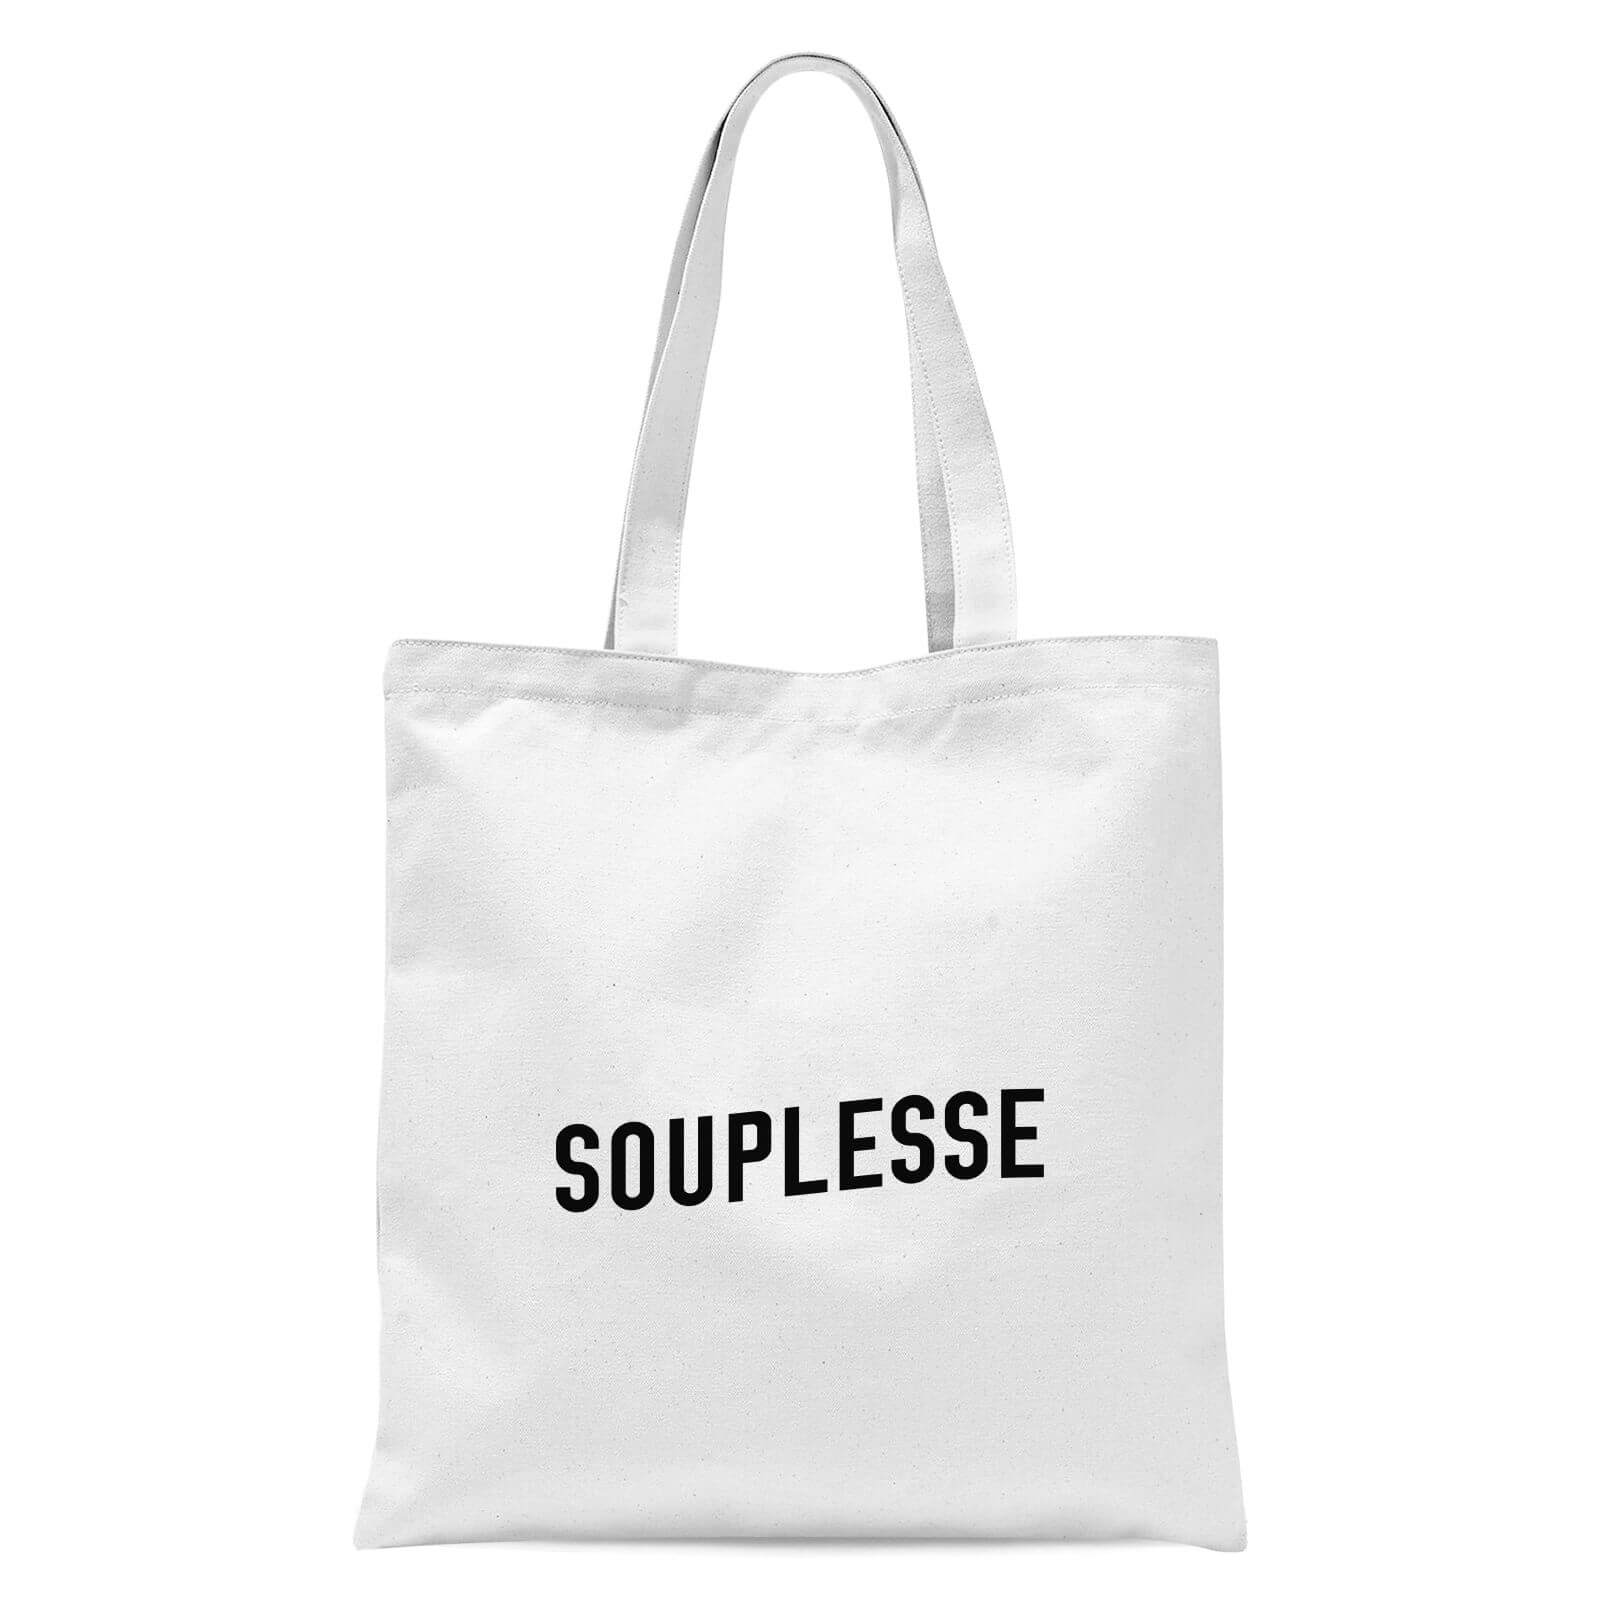 Souplesse Tote Bag - White